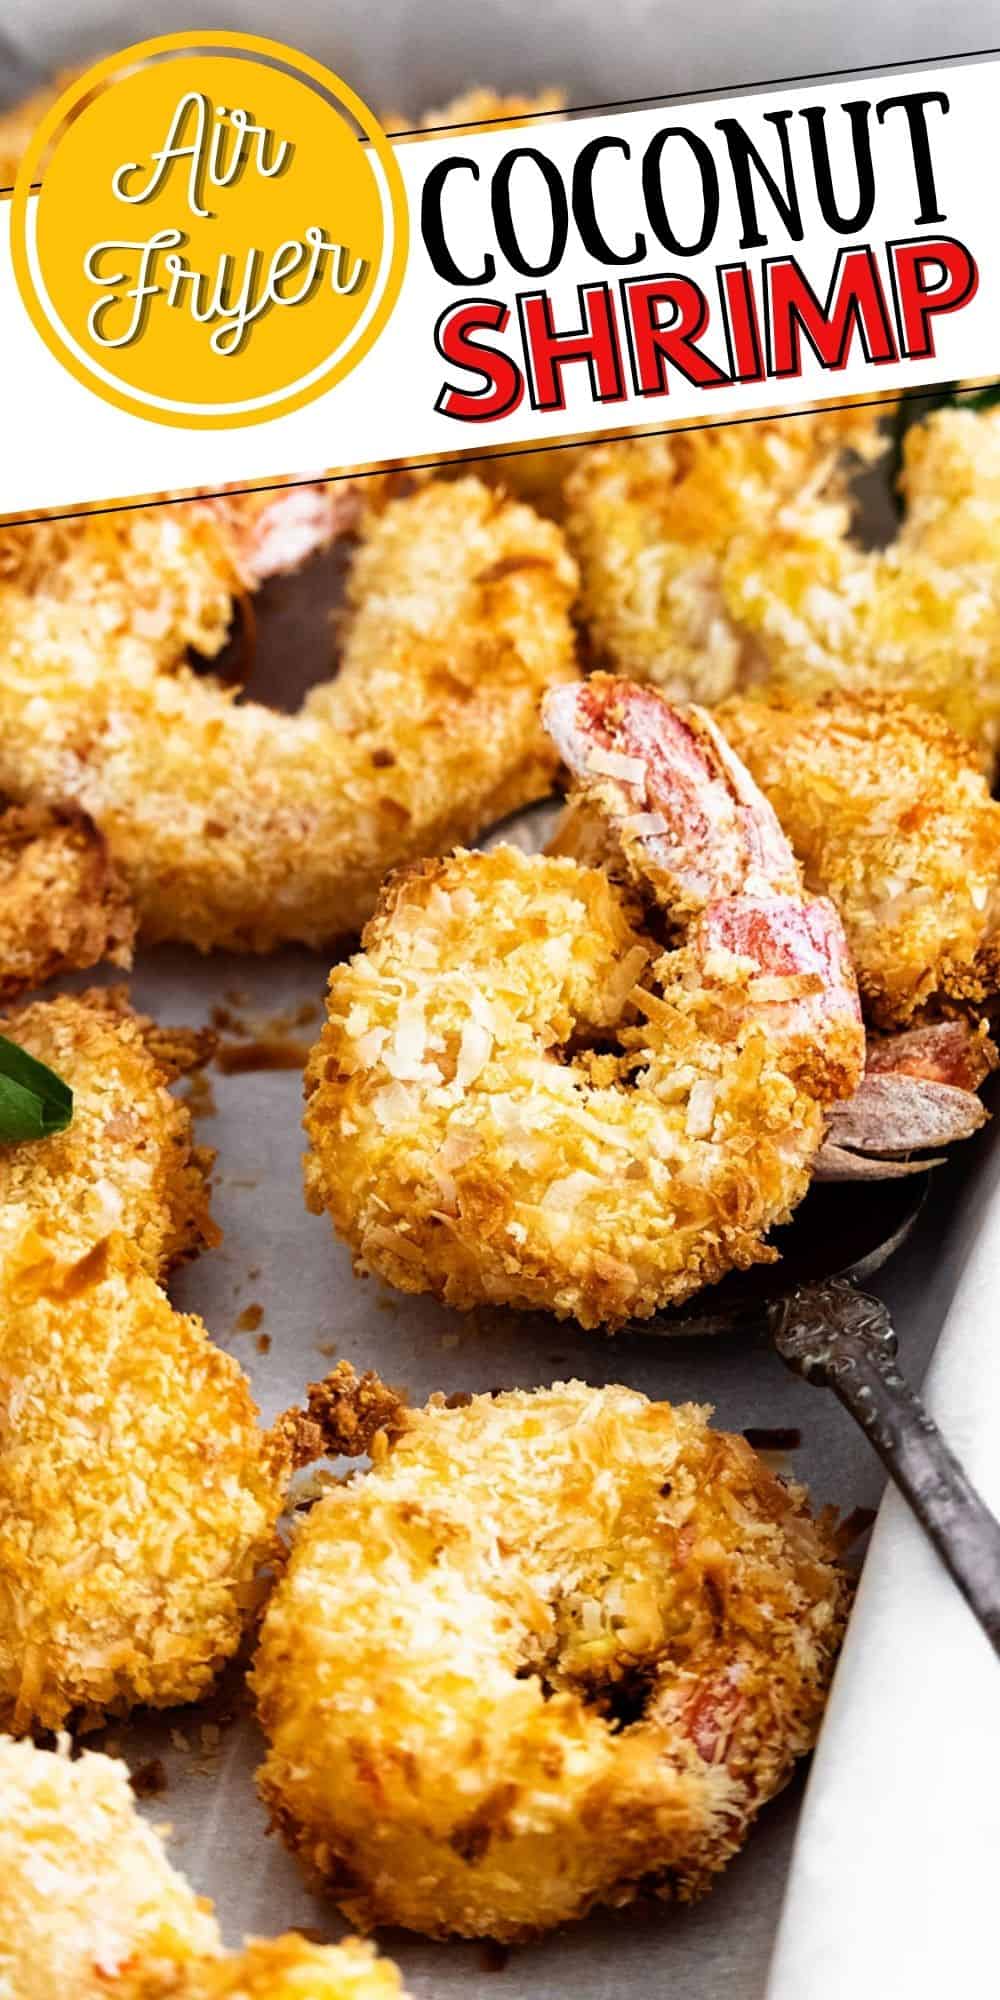 Air Fryer Coconut Shrimp | Great shrimp appetizer recipes